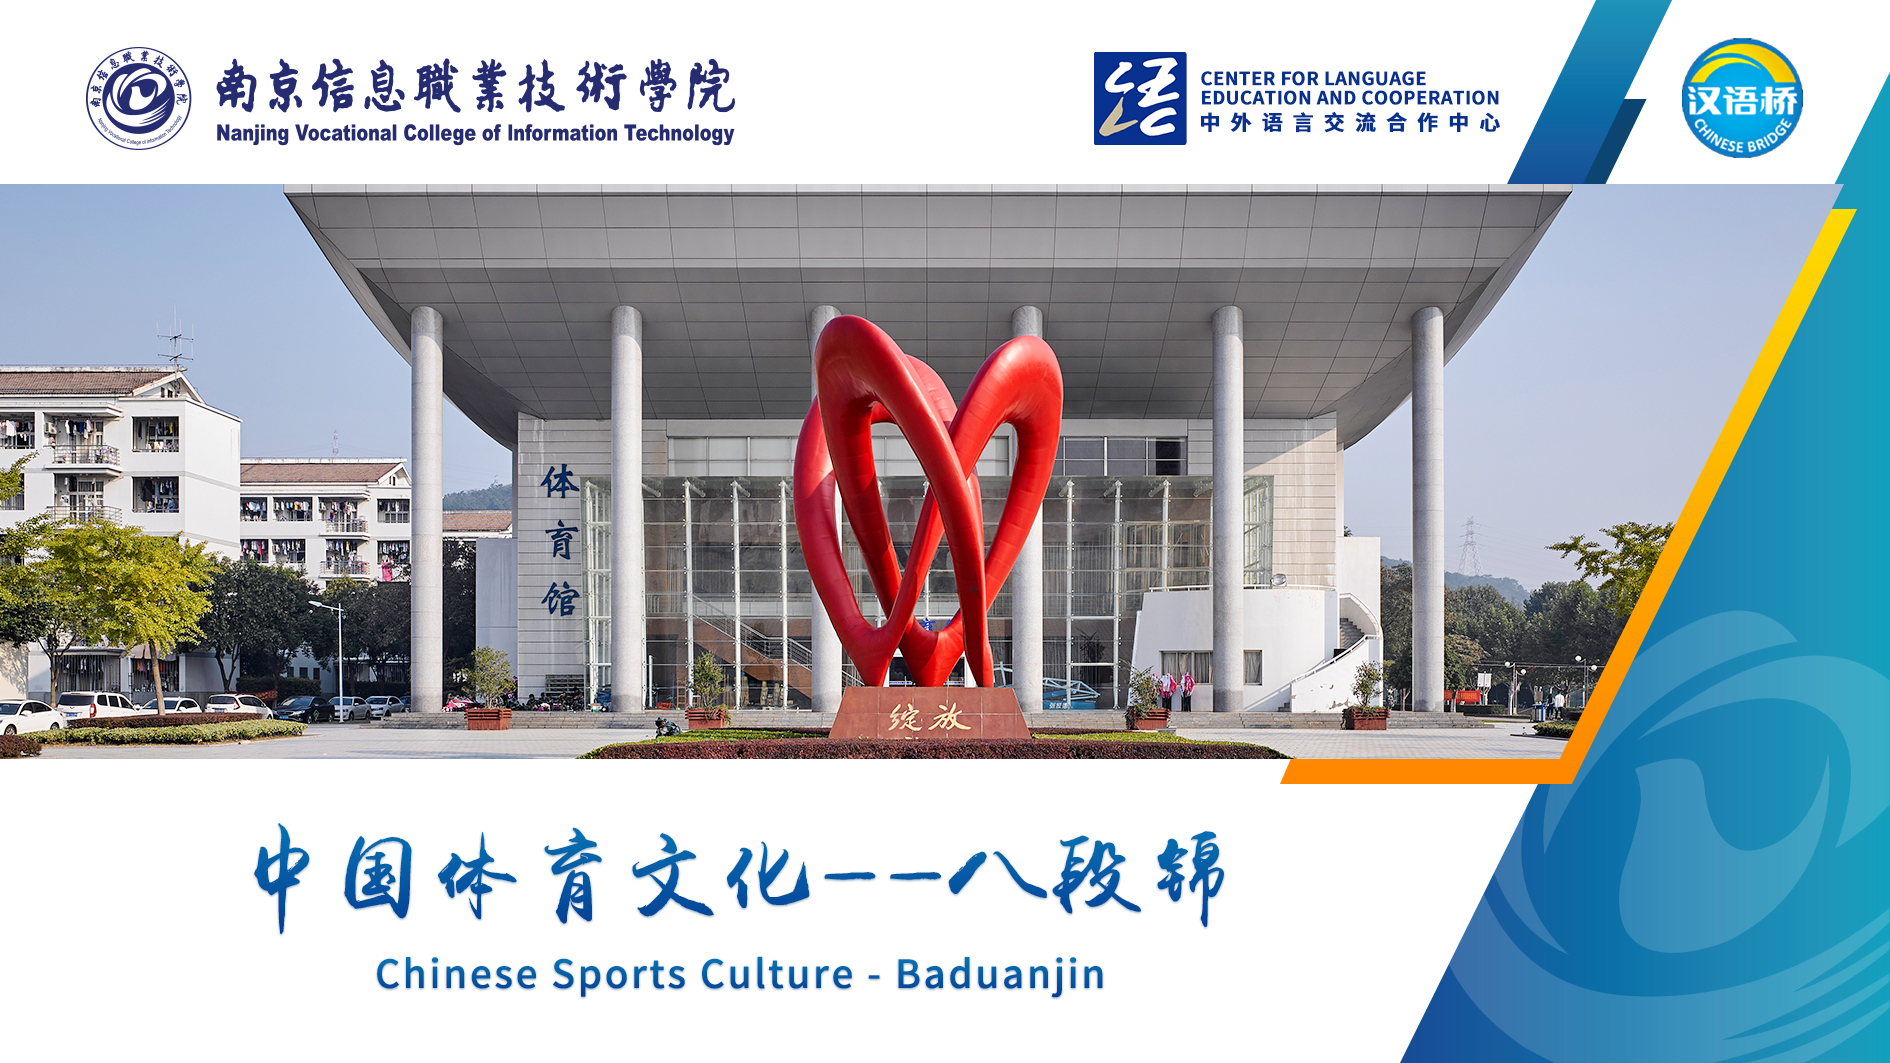 Chinese Sports Culture - Baduanjin